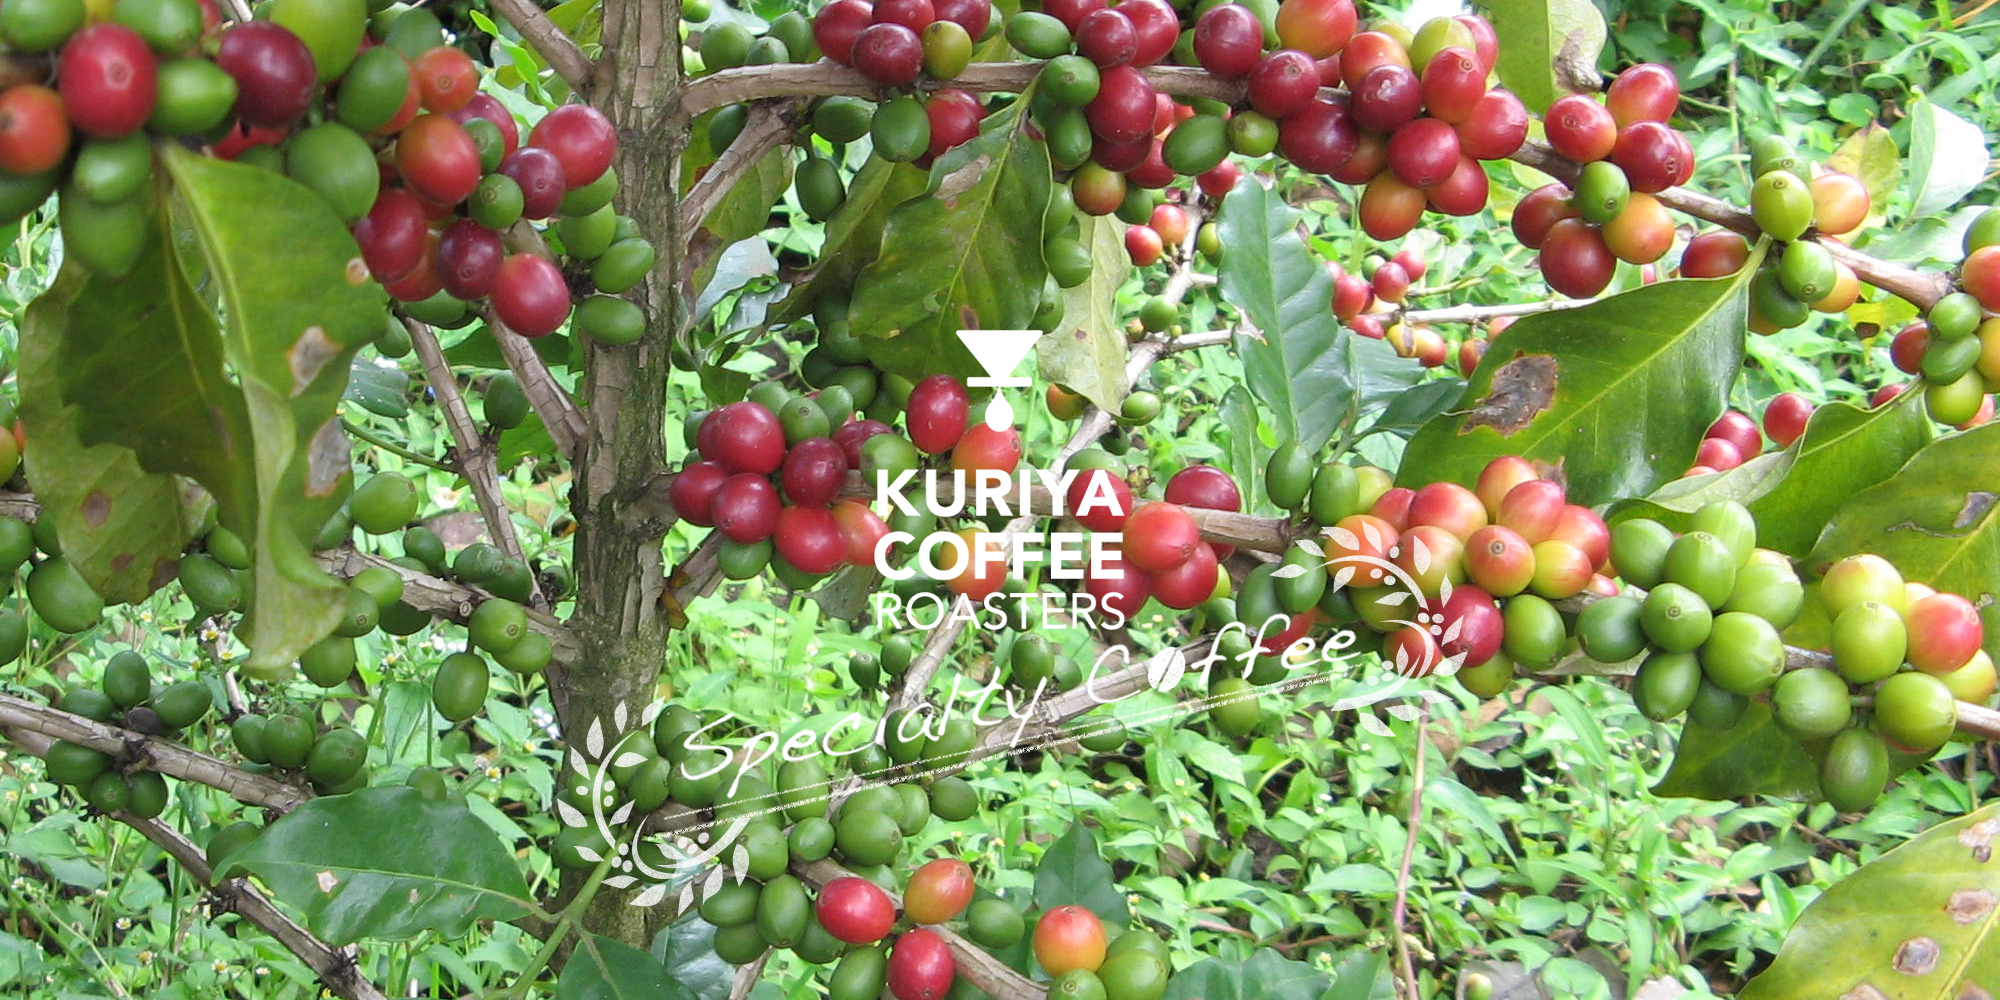 KURIYA COFFEE ROASTERS